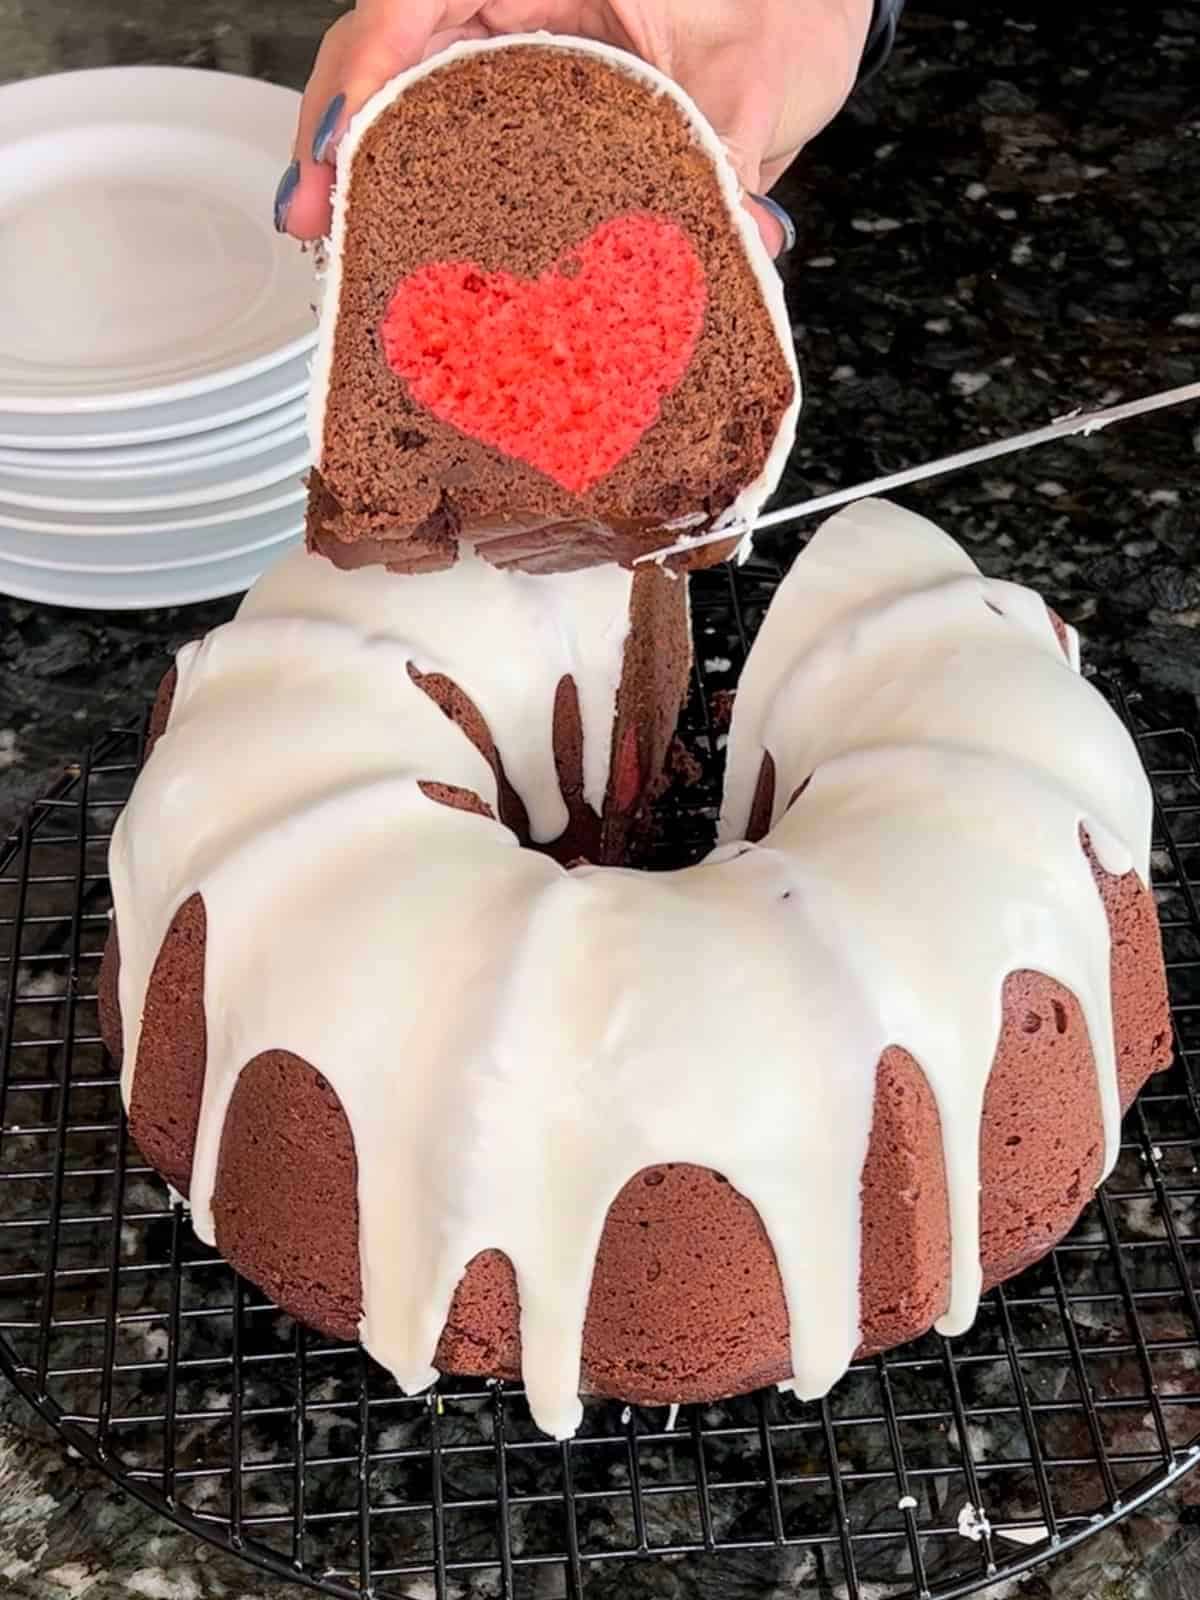 Chocolate Bundt Cake and Slice with Heart surprise showcase and Vanilla Glaze